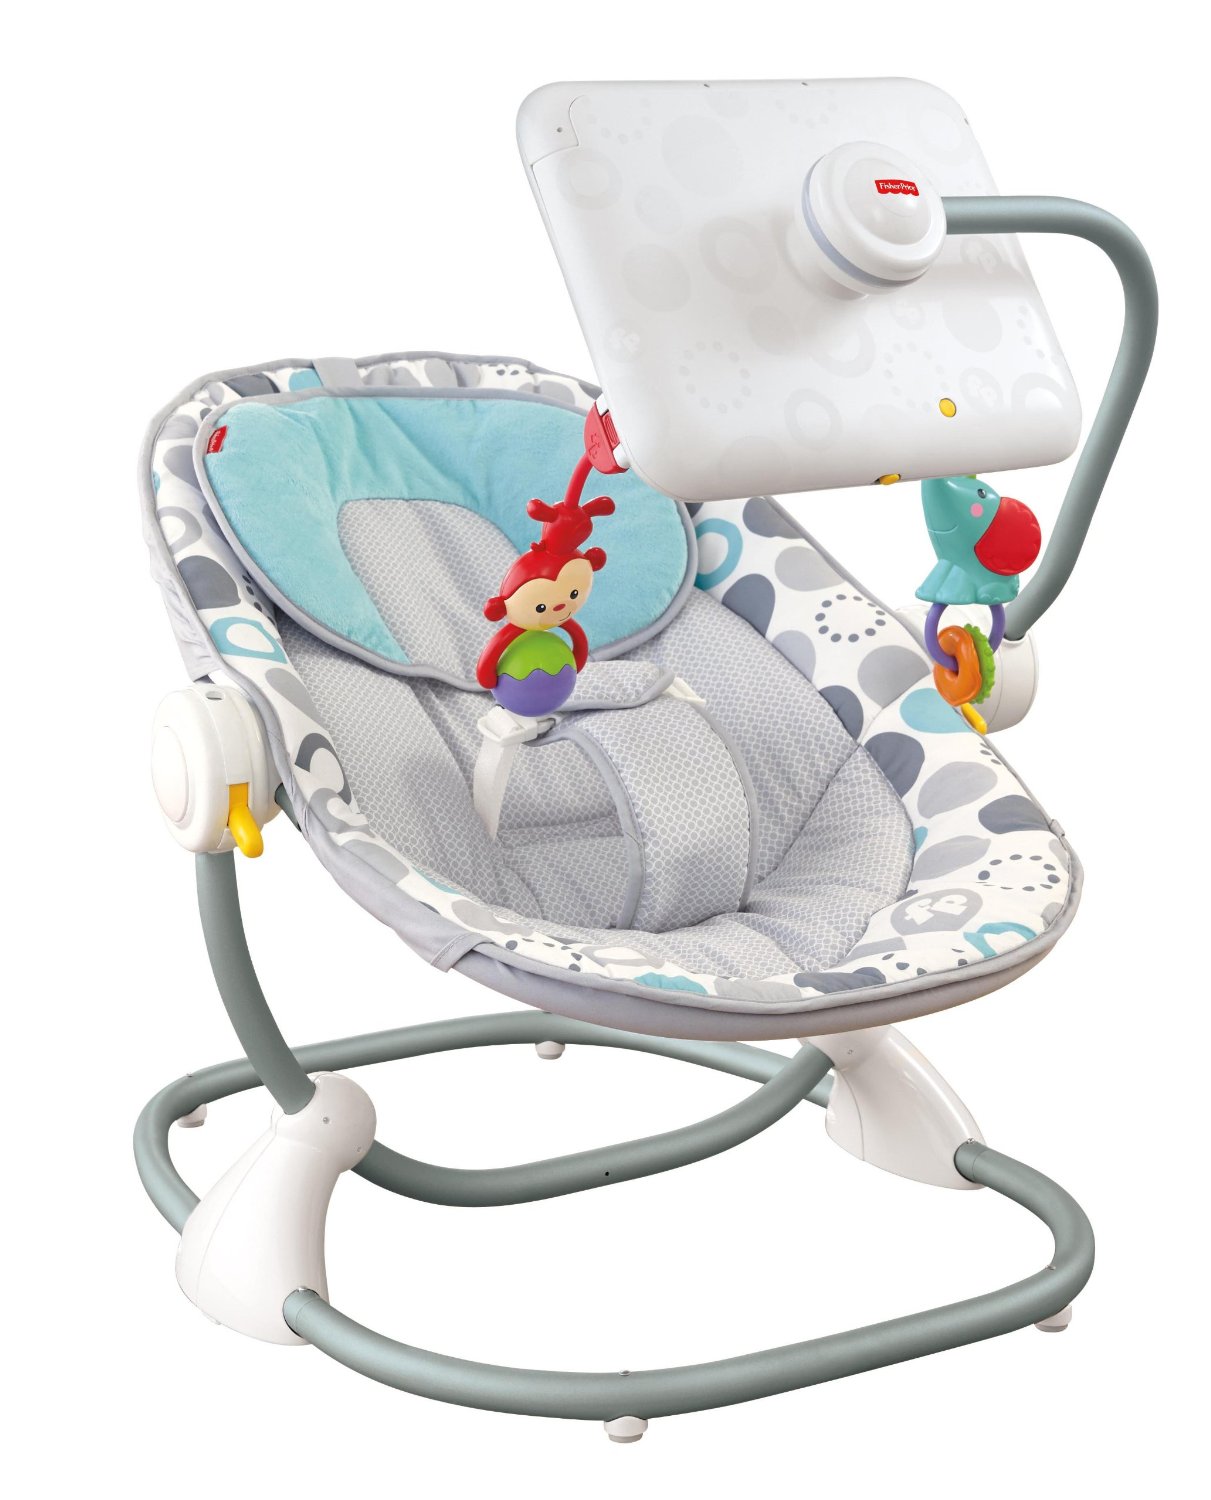 Baby Seat With Ipad Stand Genius Idea Or Worst Baby Brainwashing